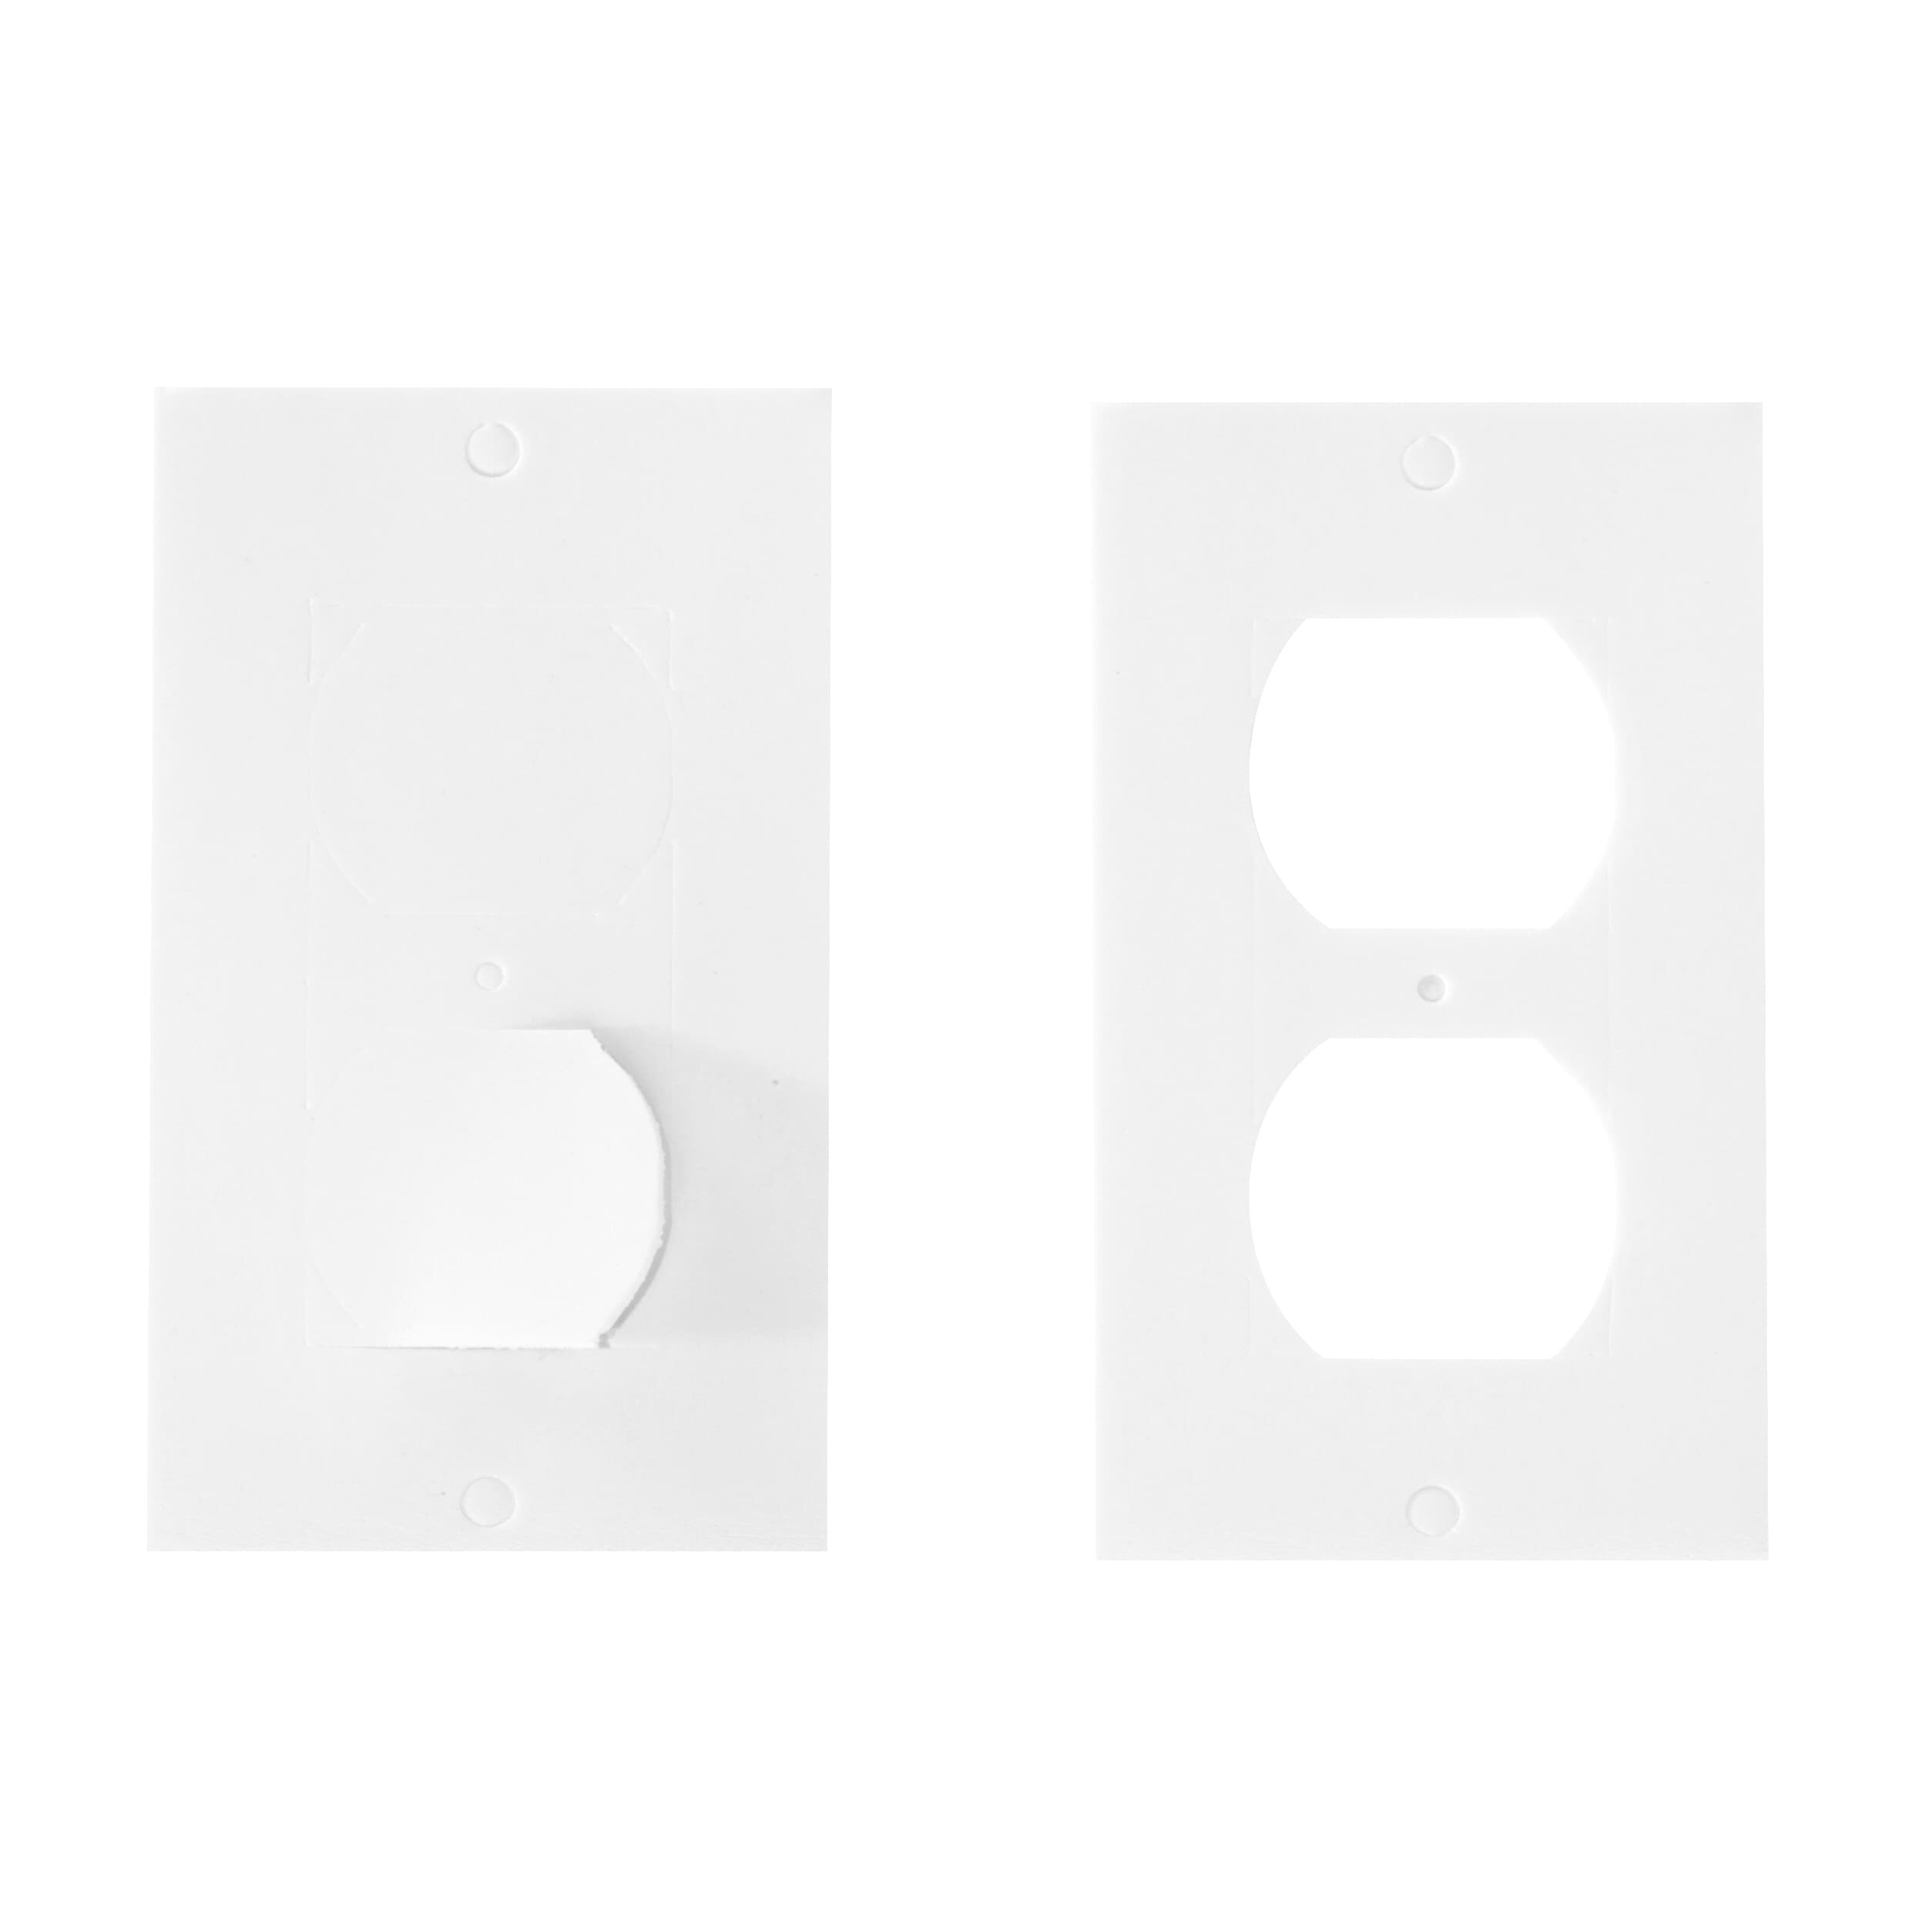 White Polyethylene Foam Sheet Case Shipping Packaging 10 Pack - 1/2 x 4 x  12